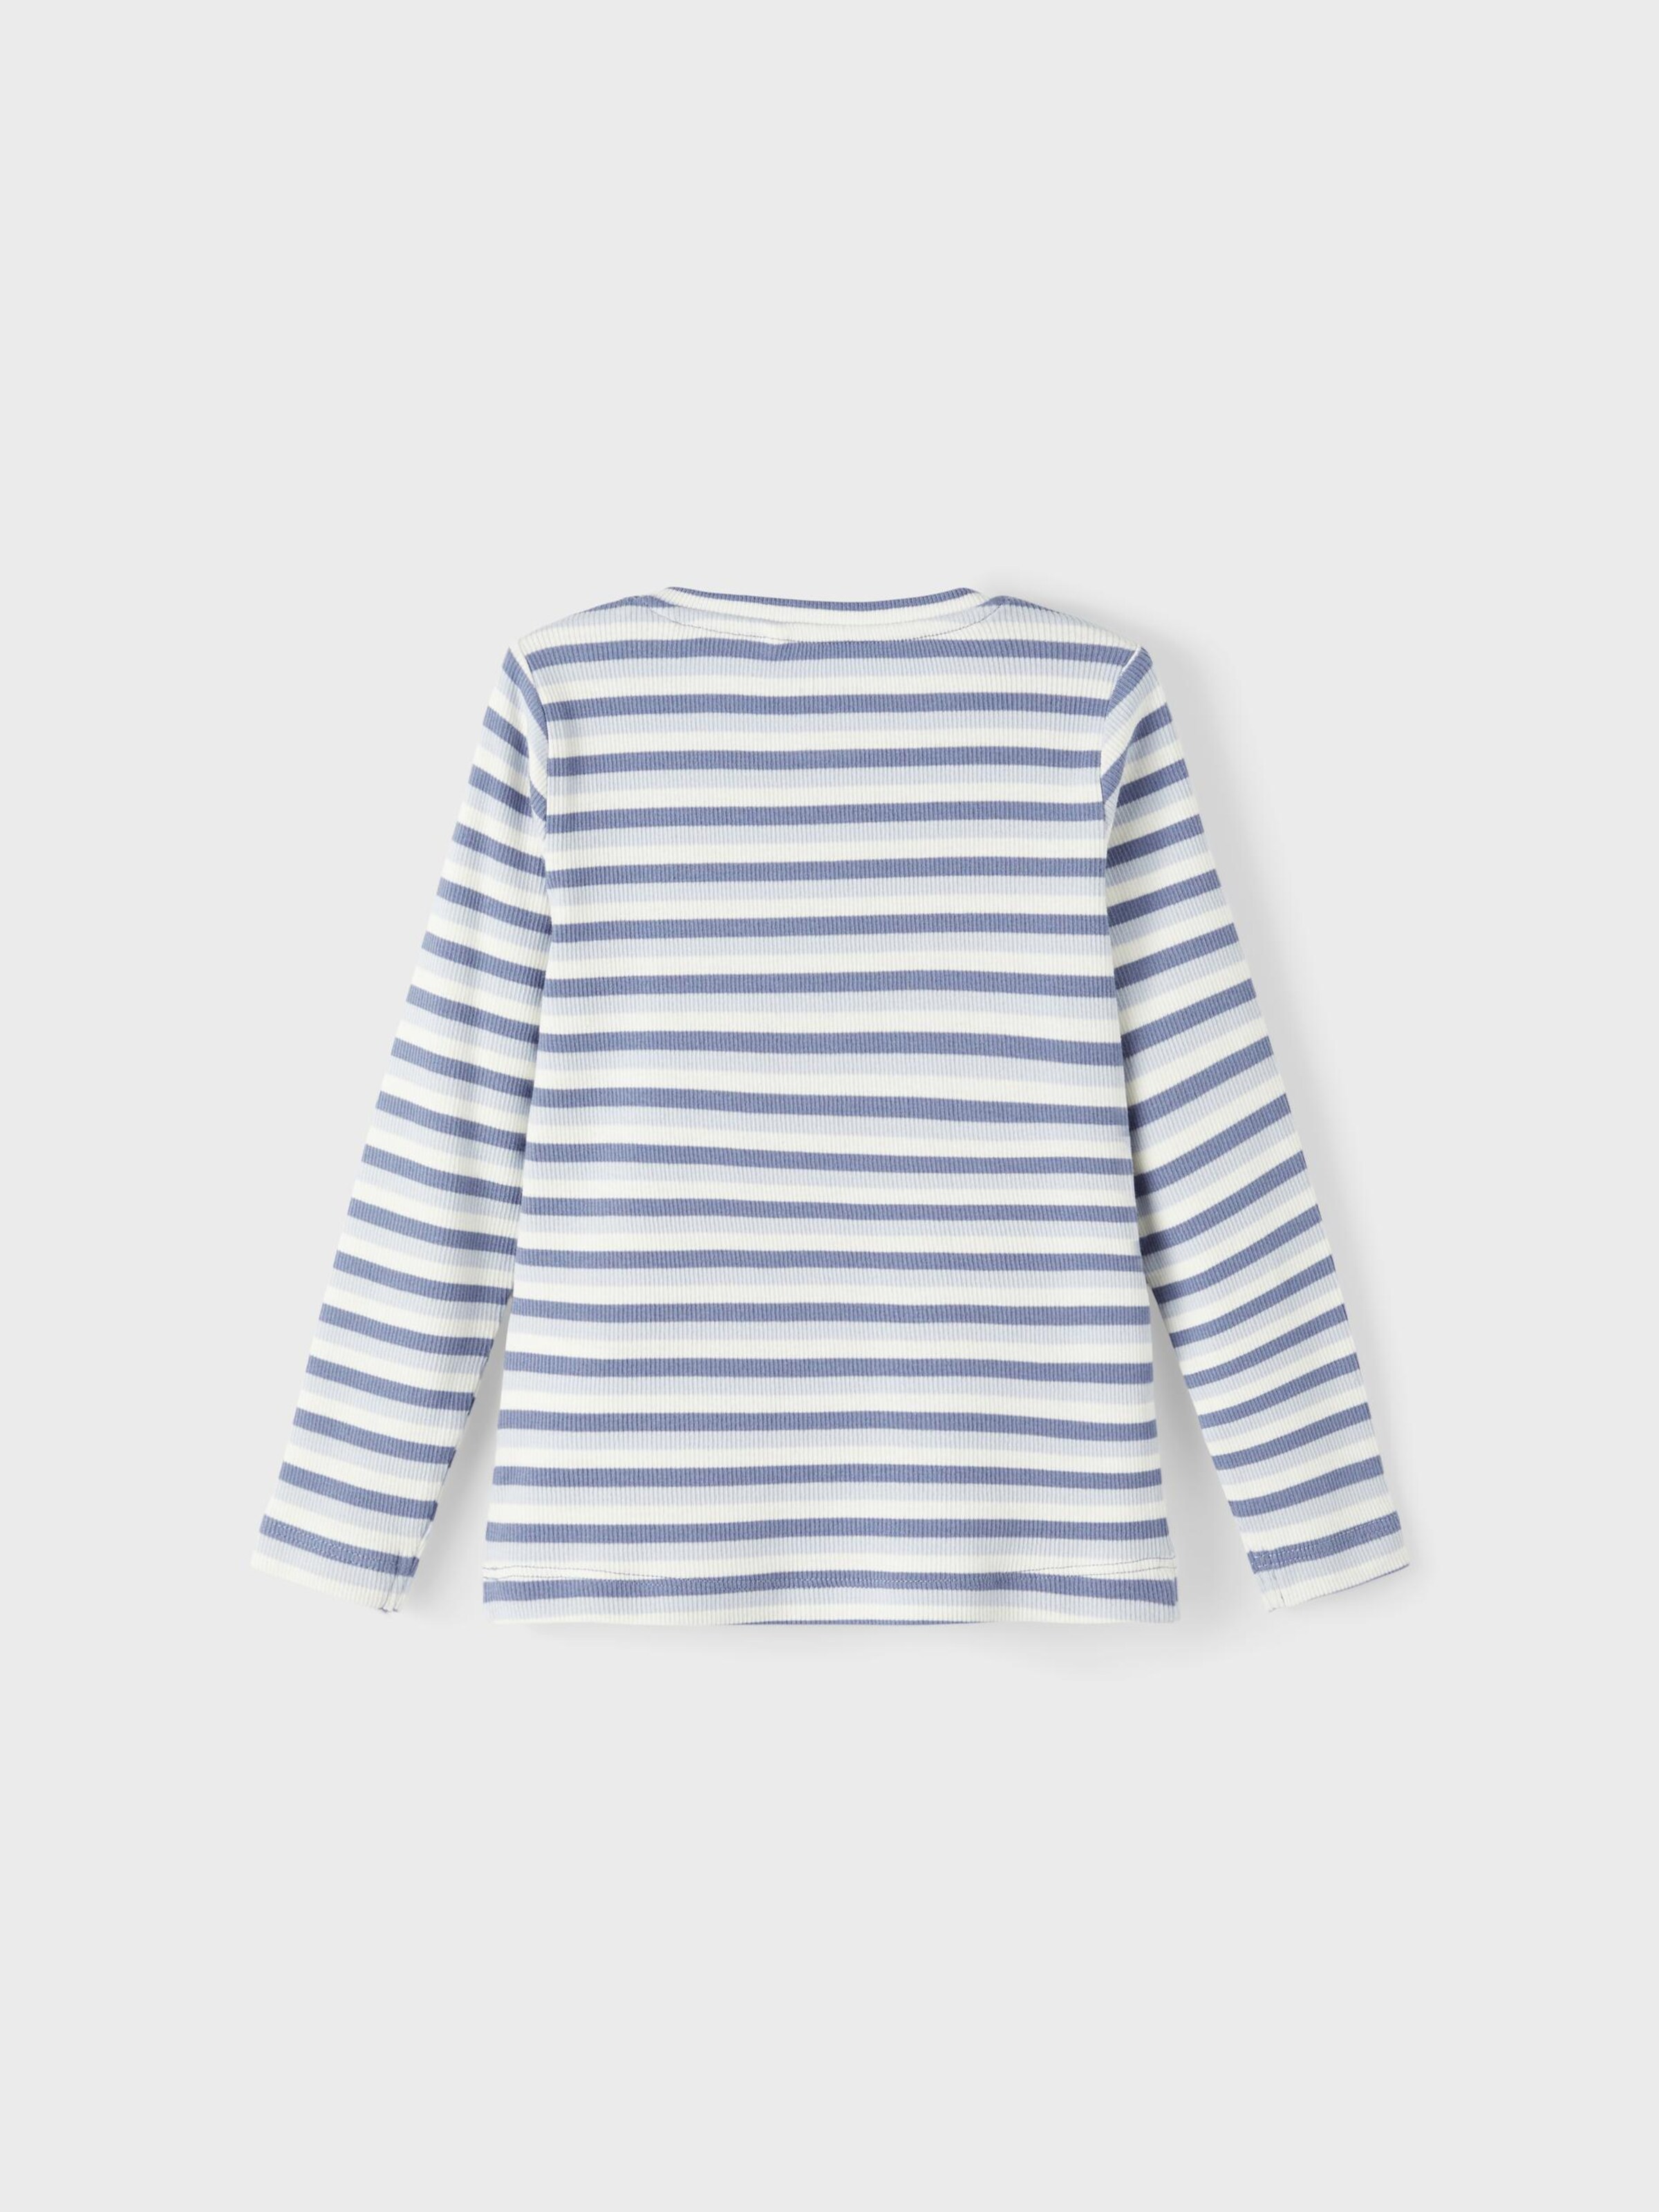 Kinder Bekleidung NAME IT Shirt 'Emma' in Marine, Pastellblau, Weiß - LT85150